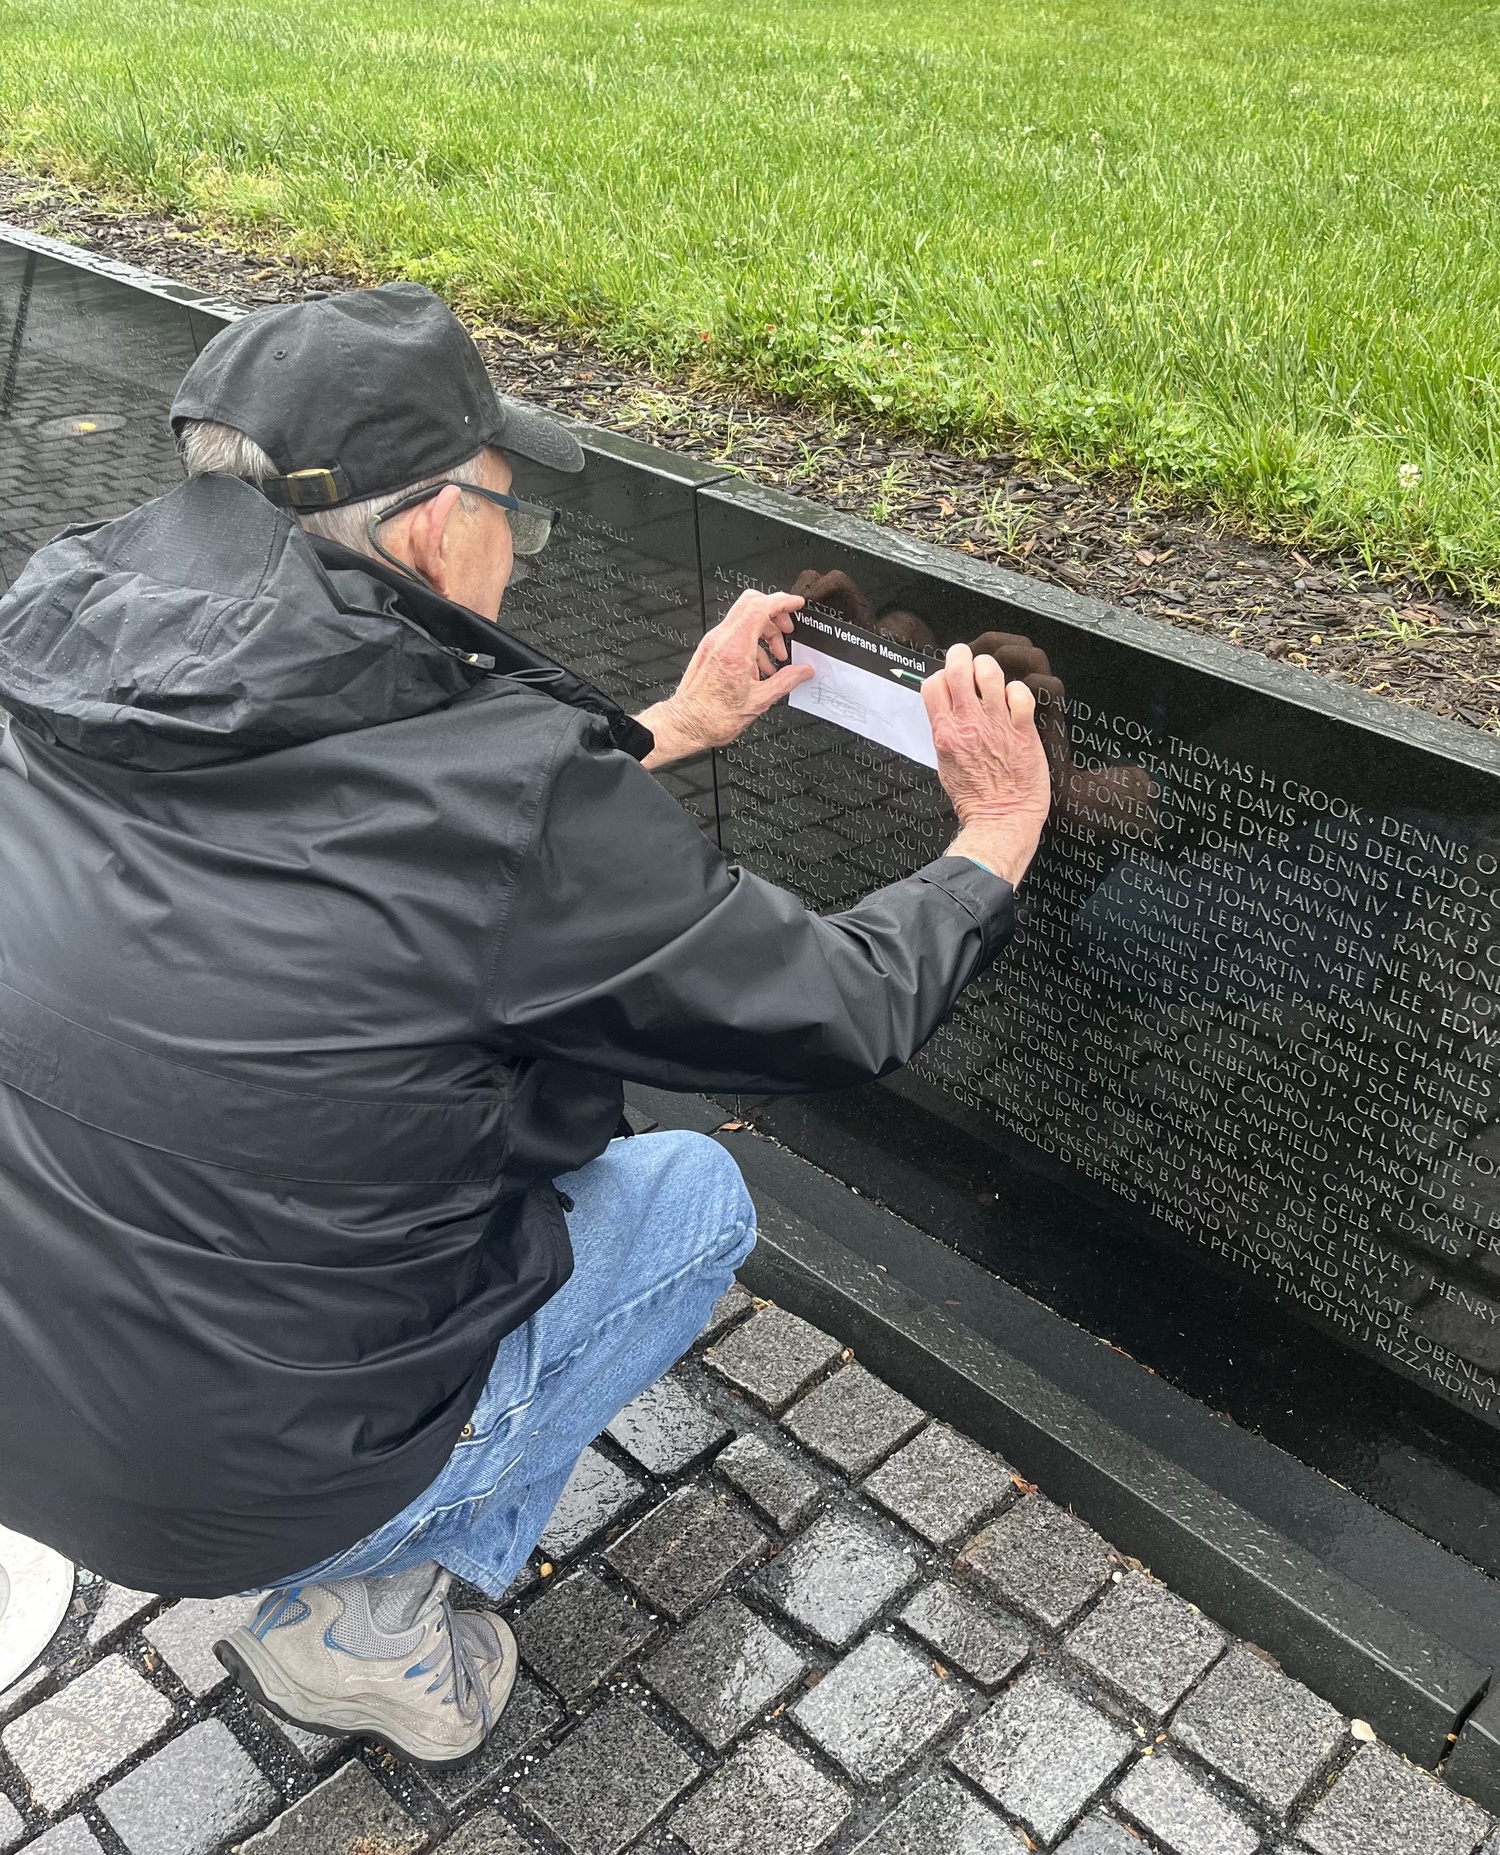 Vietnam War veteran Dennis Riordan makes an etching of a fallen comrade's name. MARIA MOORE